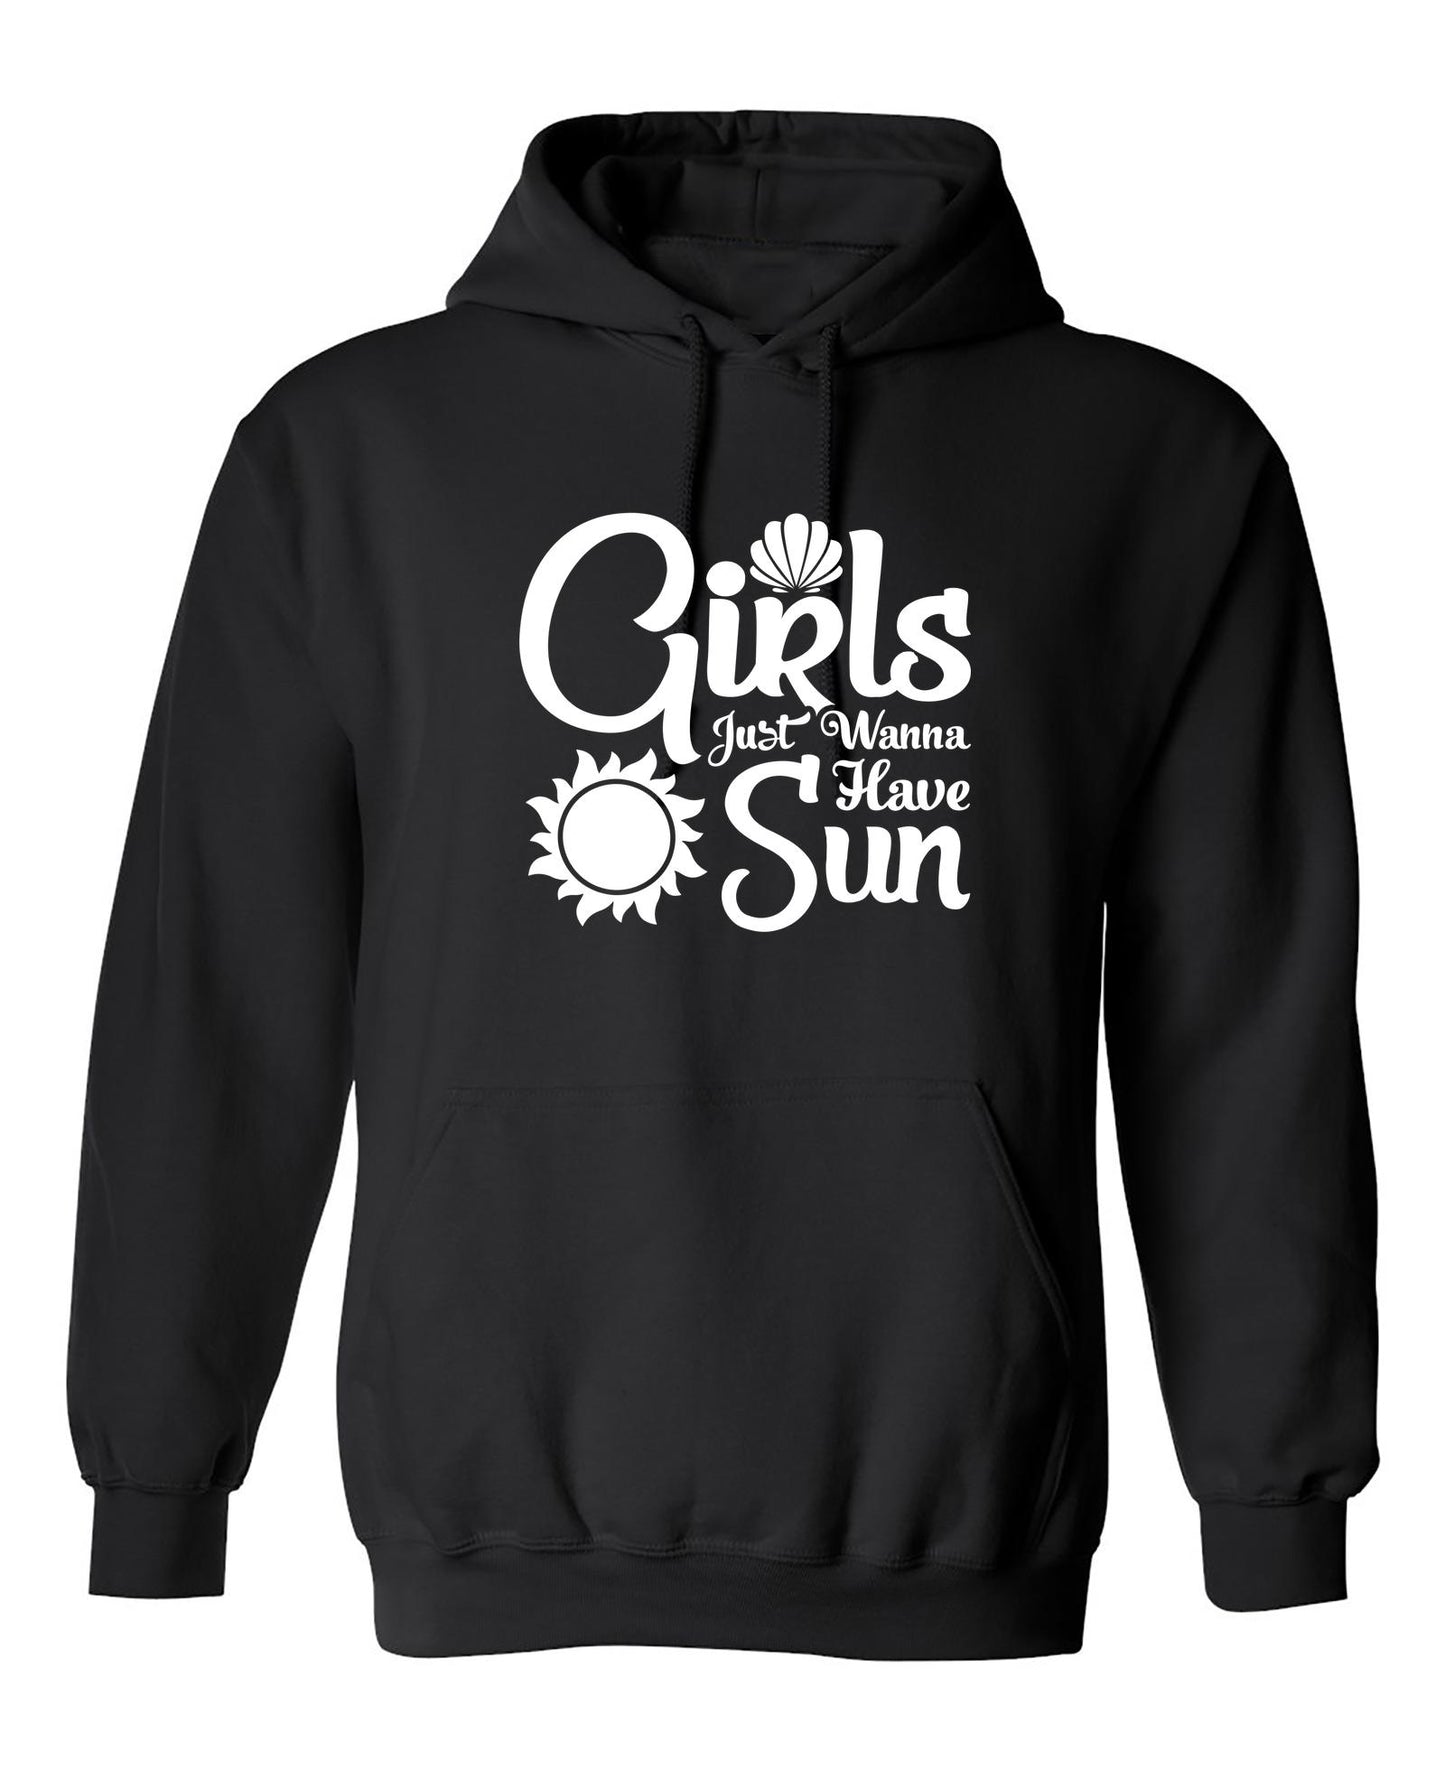 Funny T-Shirts design "Girls Just Wanna Have Sun"